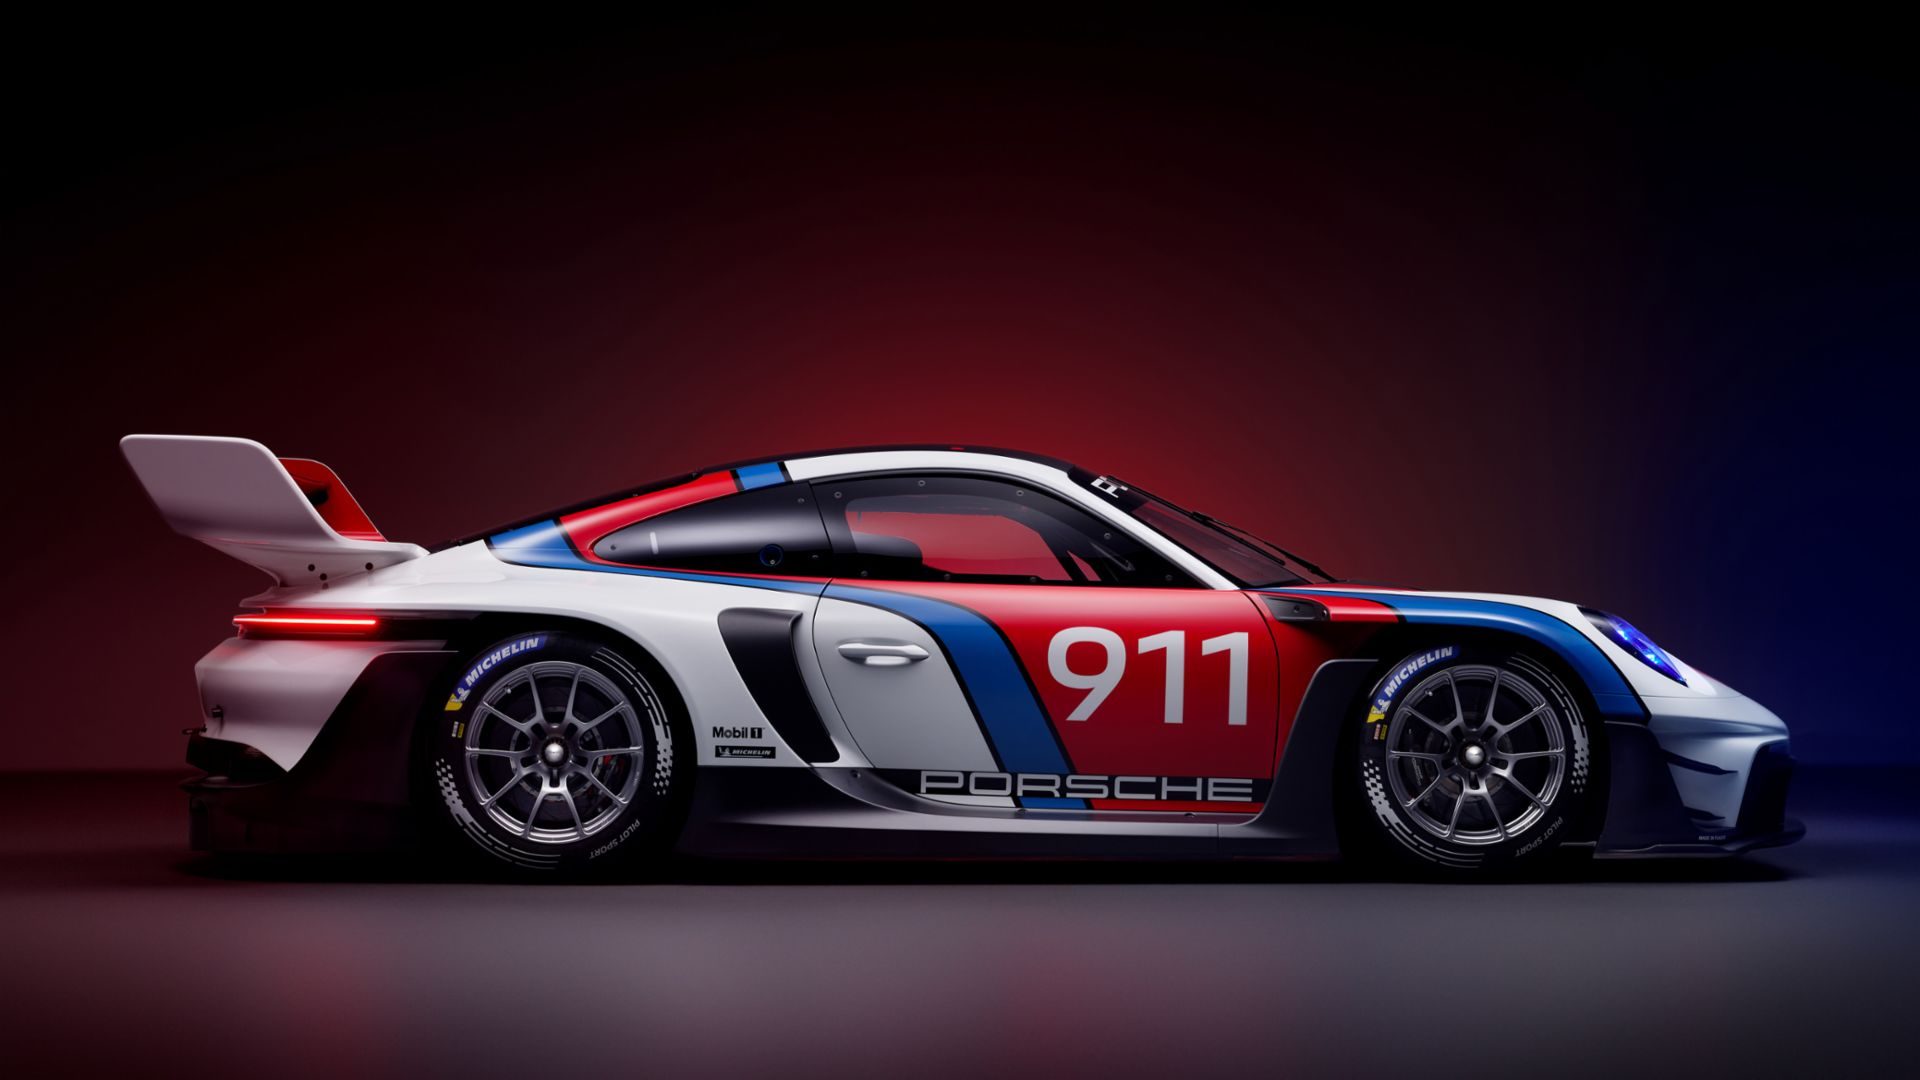 Nowe Porsche 911 GT3 R resport uległo awarii